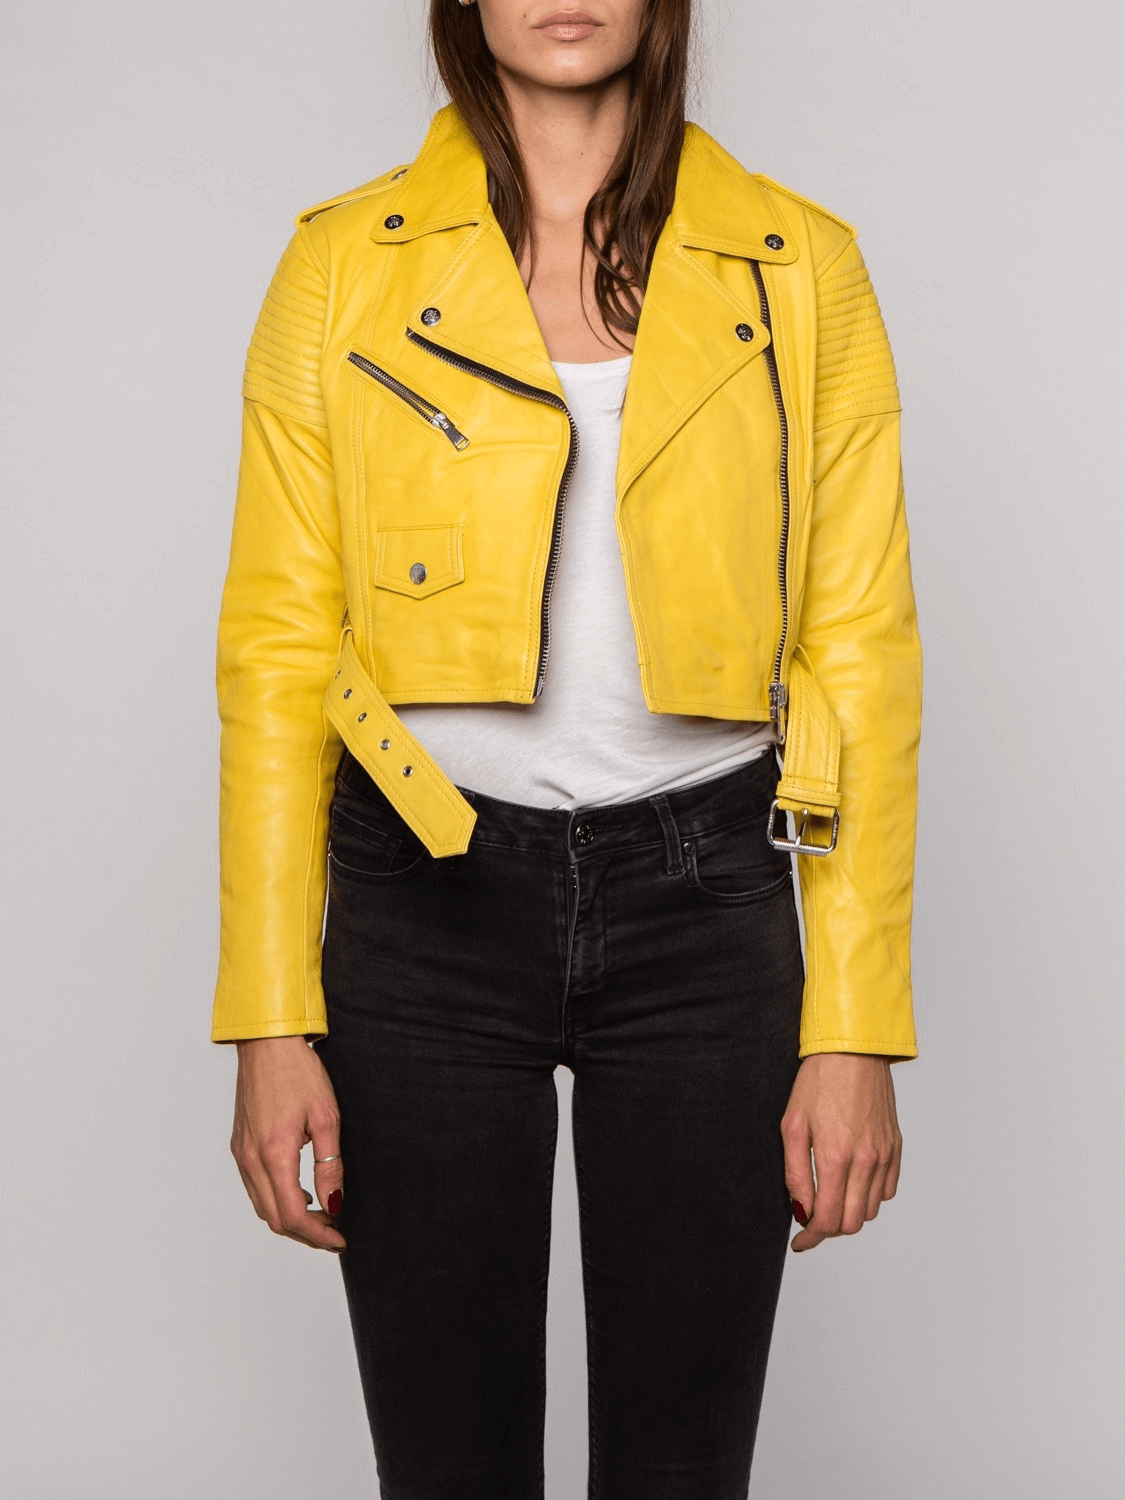 Lily Yellow Biker Leather Jacket